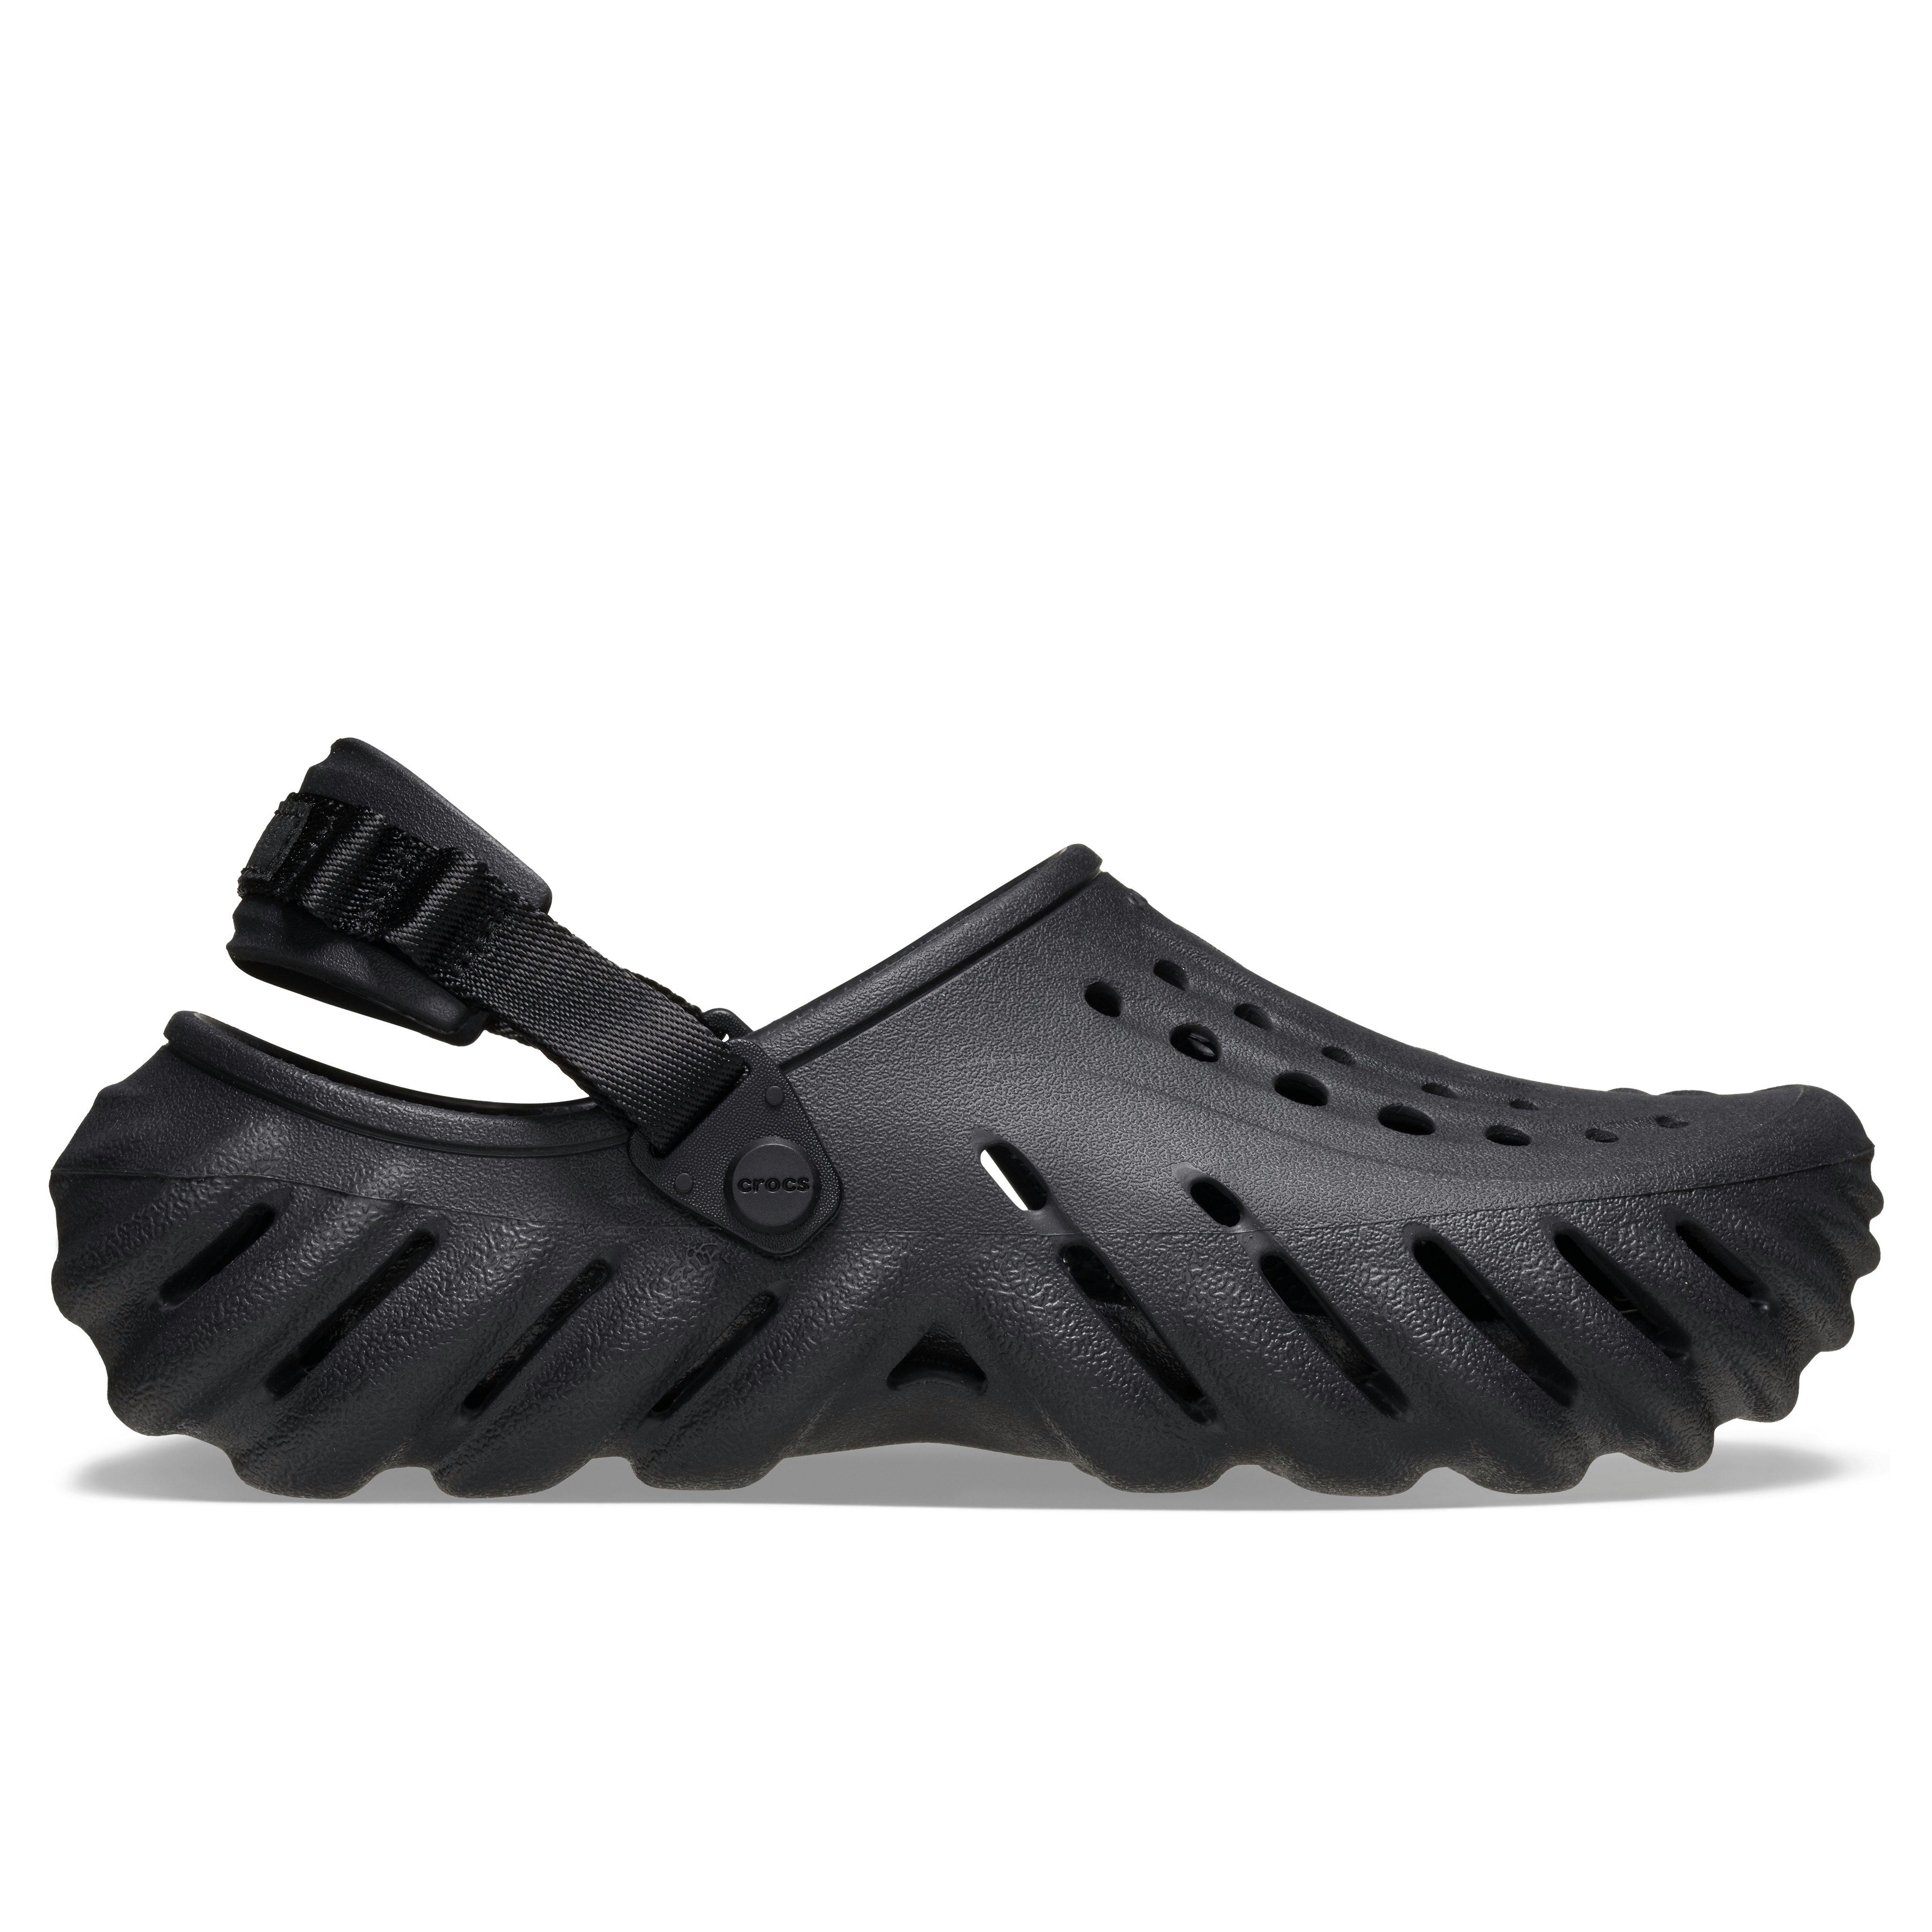 Women's Crocs Echo Clog Shoes